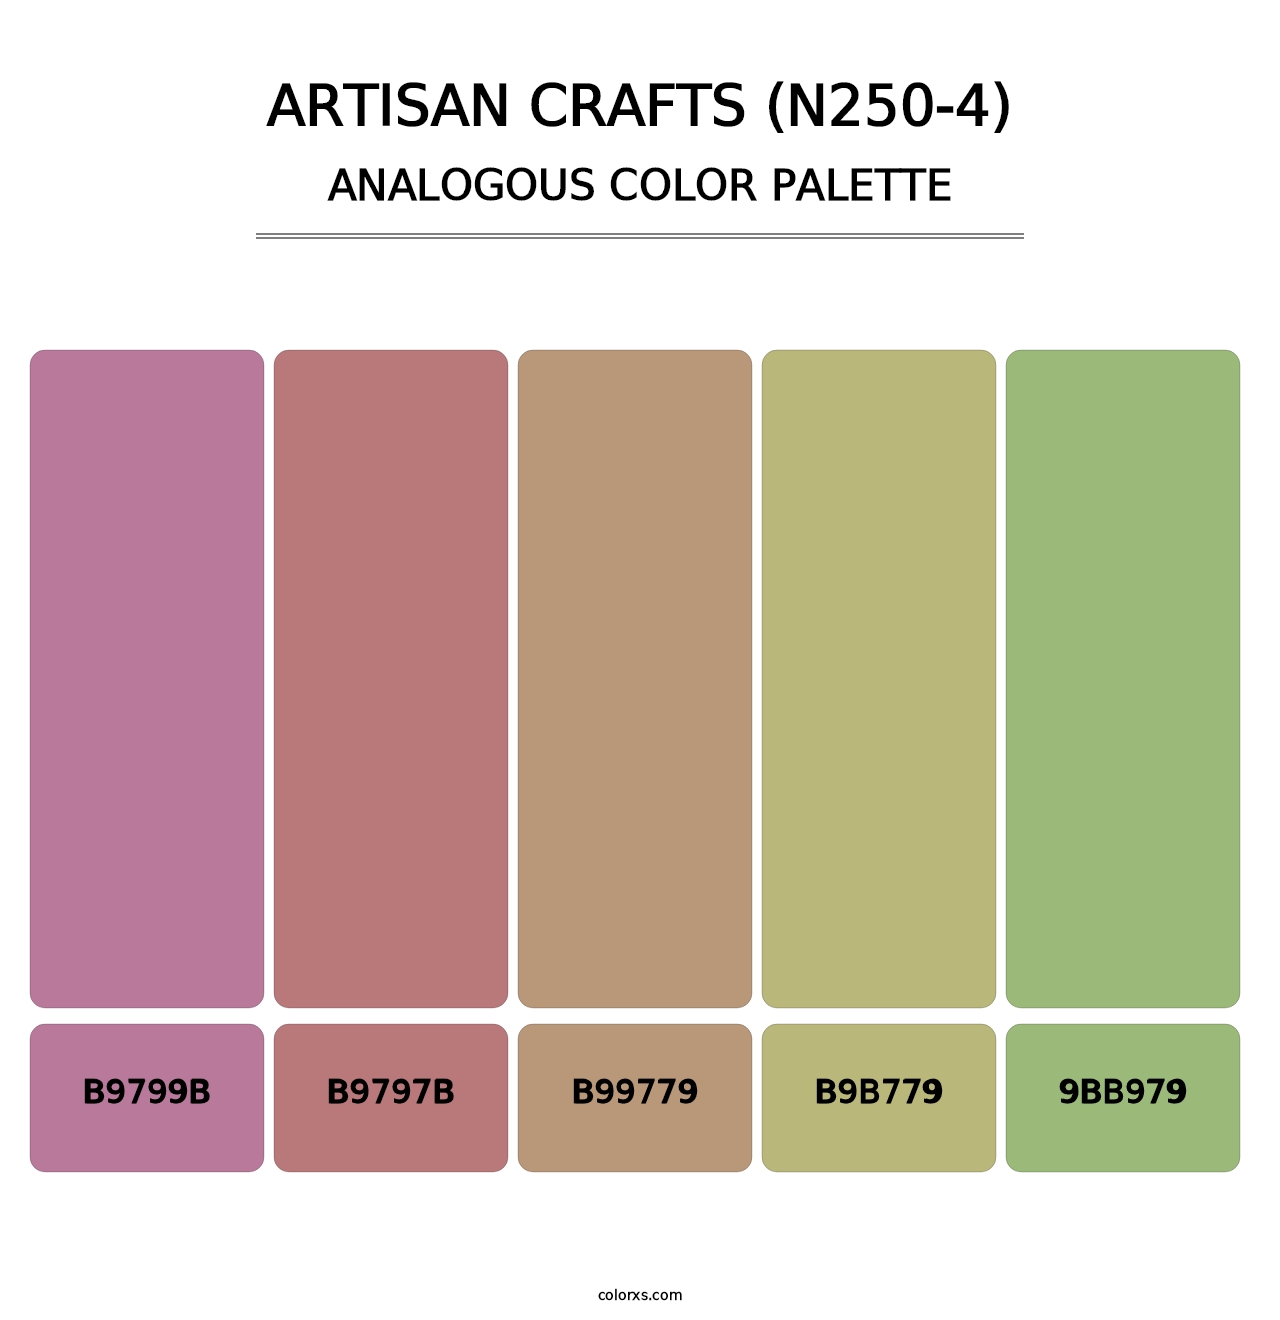 Artisan Crafts (N250-4) - Analogous Color Palette